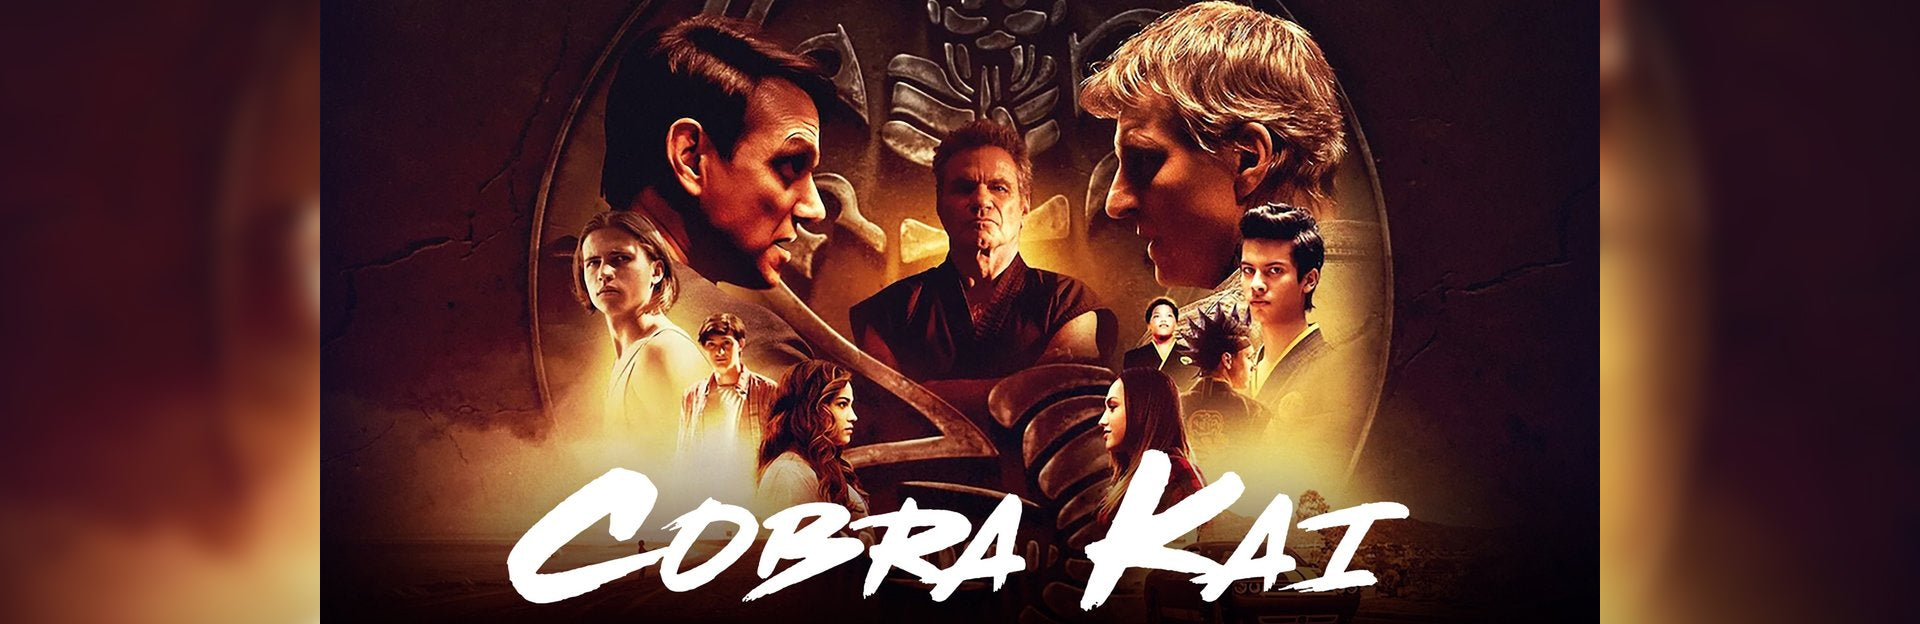 Cobra Kai - TV on Google Play